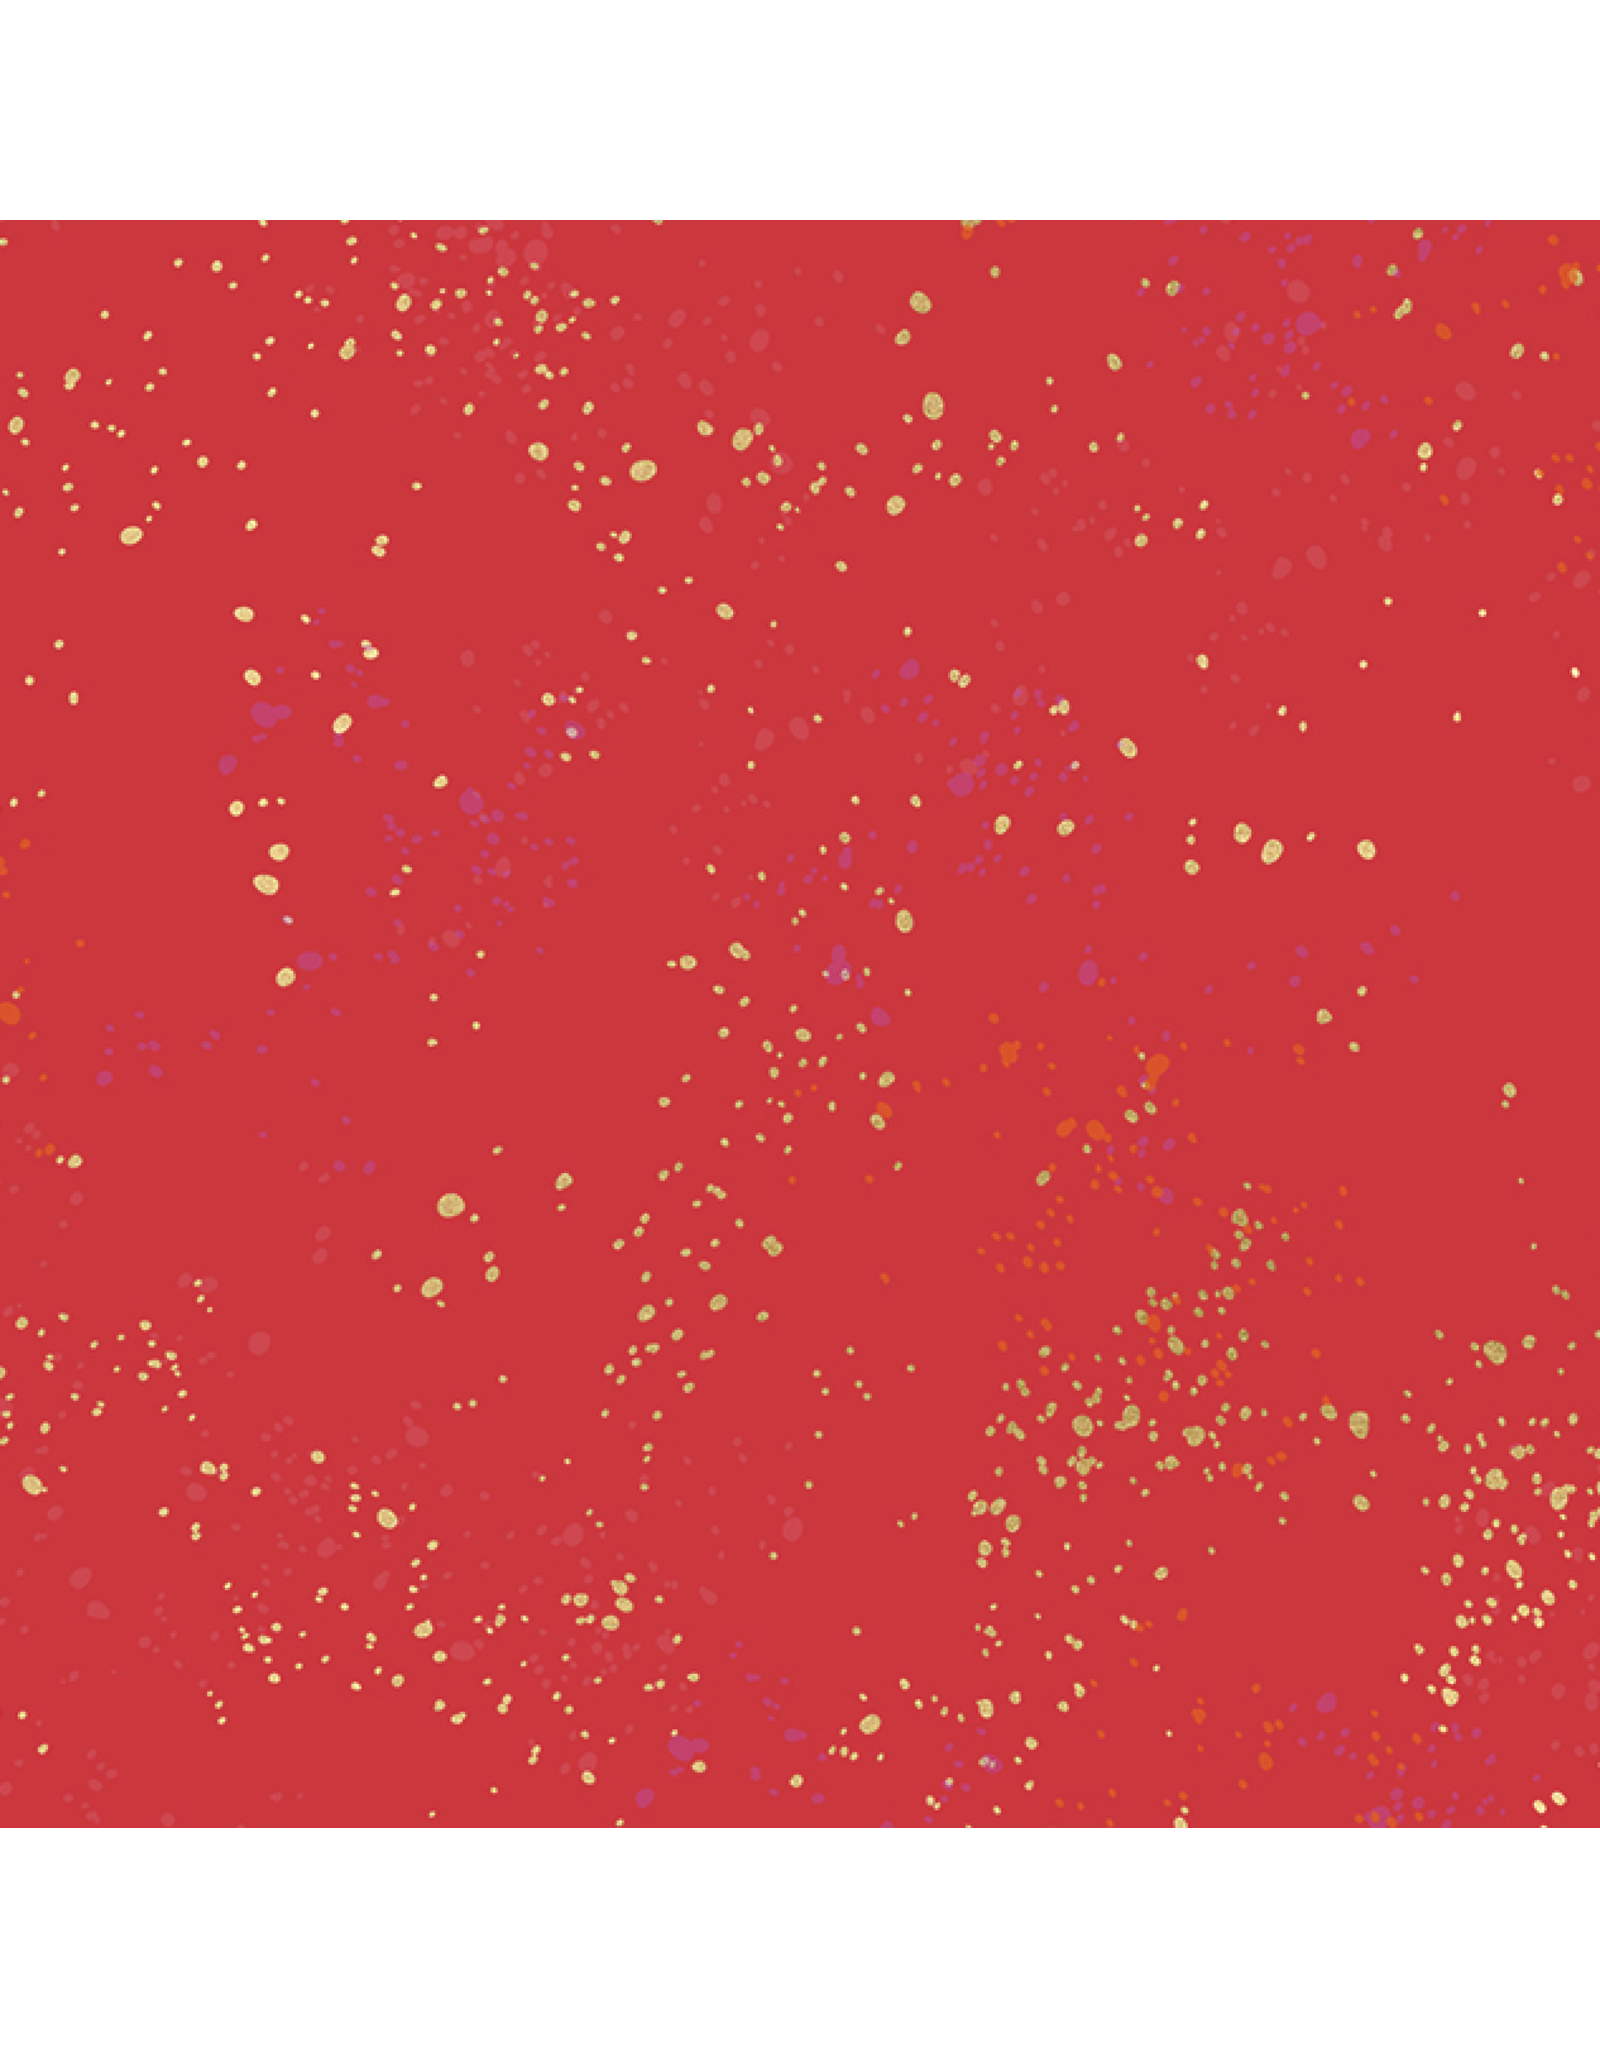 Rashida Coleman-Hale Ruby Star Society, Speckled New in Scarlet, Fabric Half-Yards